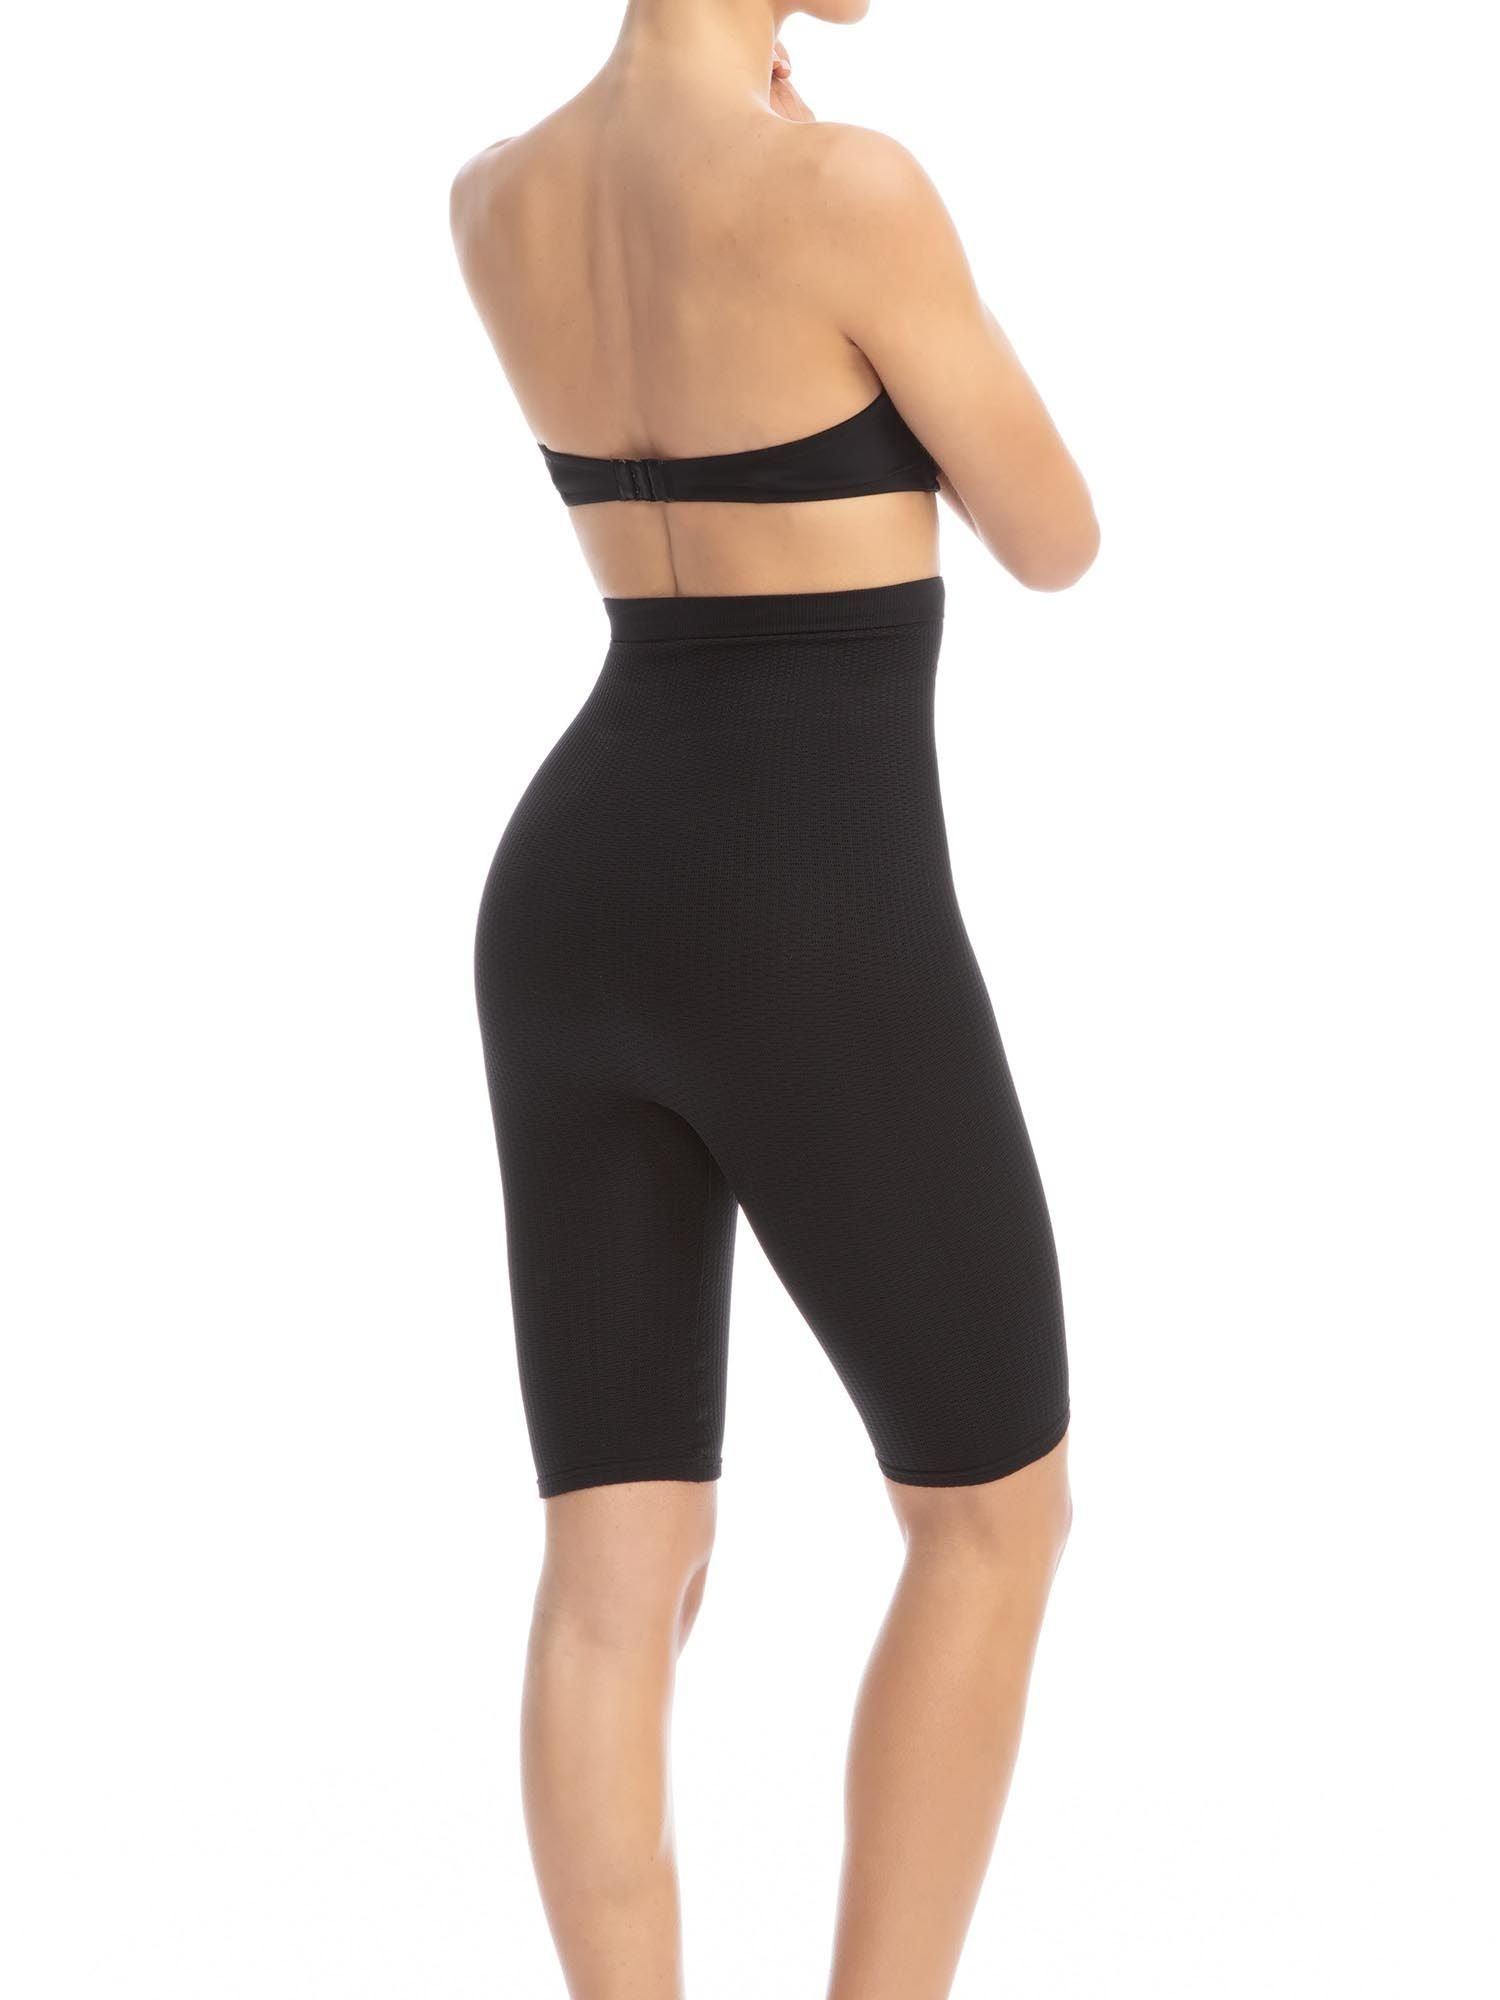 Women's high-waisted anti-cellulite micromassage shorts - Wellness Shoppee